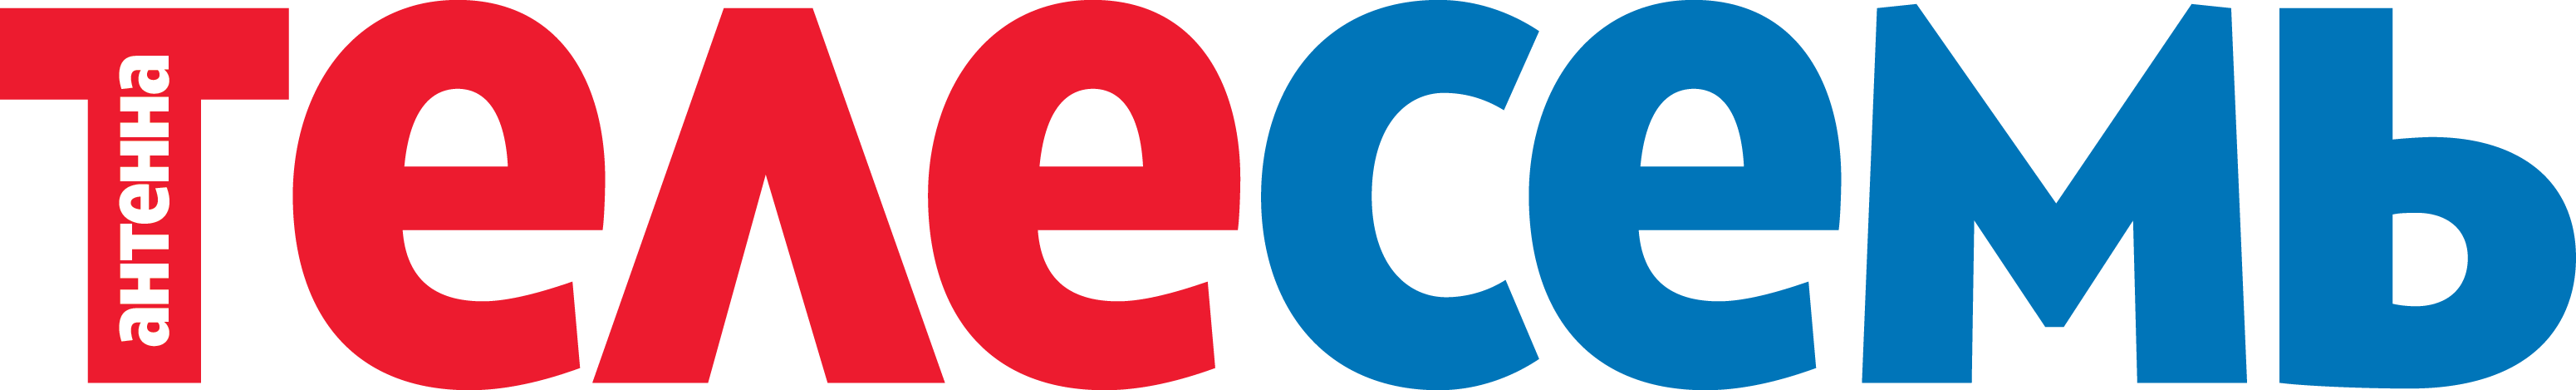 AT7-logo-Телесемь